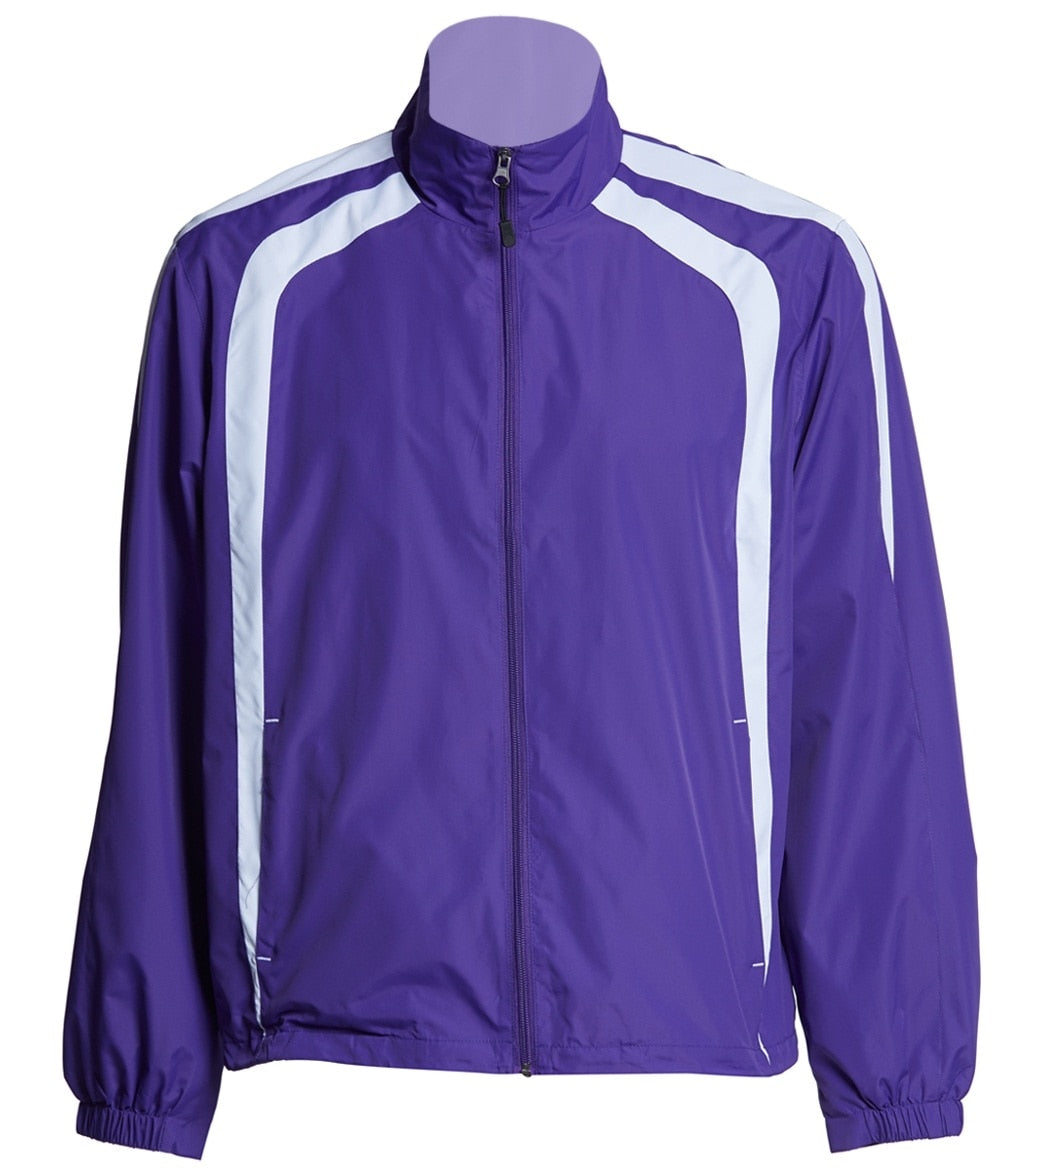 Men's Warm Up Jacket - Purple/White Large Polyester - Swimoutlet.com